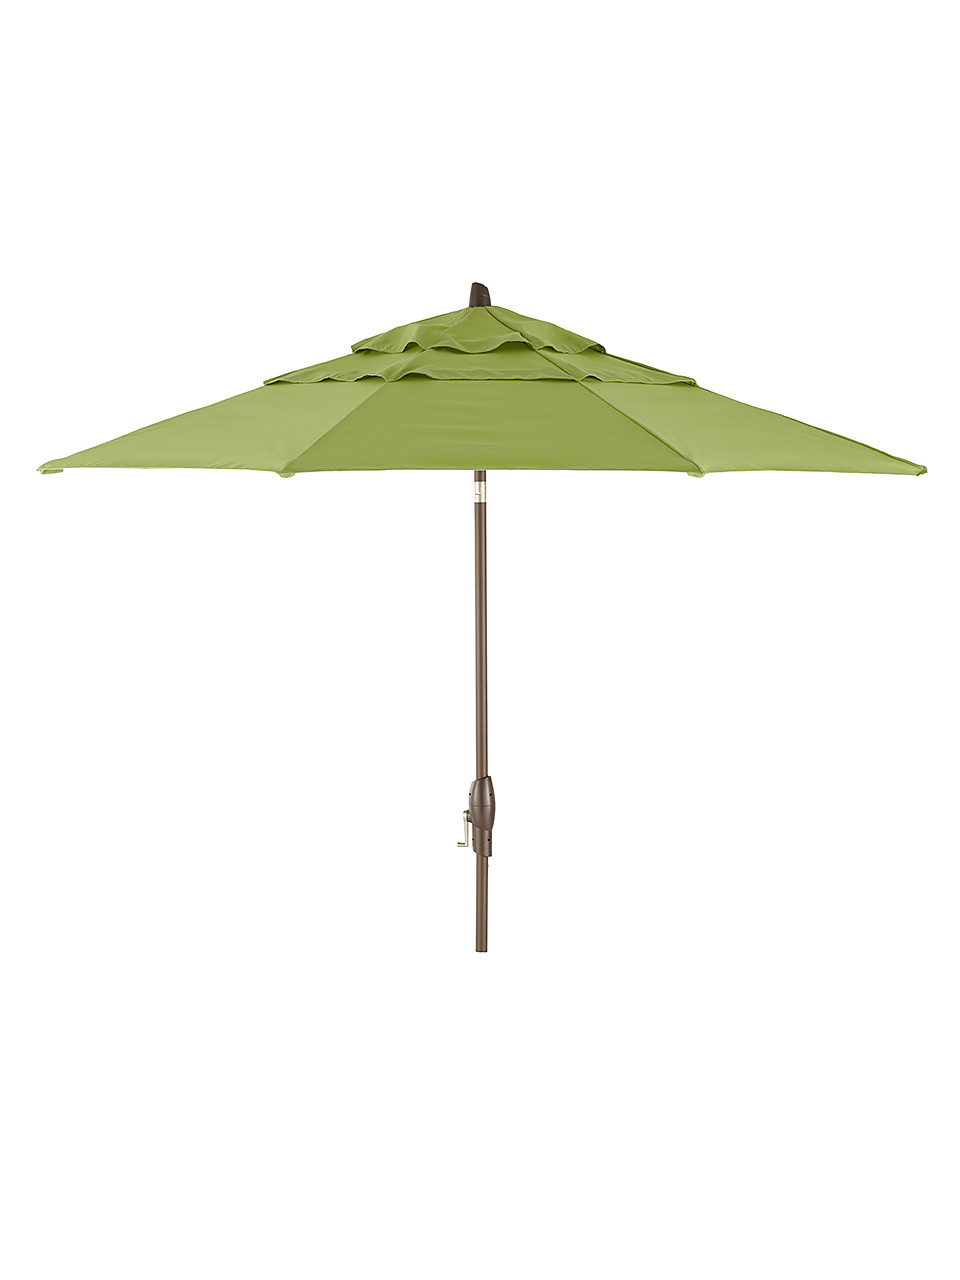 Treasure Garden 9 ft. Kiwi Canopy and Bronze Aluminum Market Umbrella (UM810)